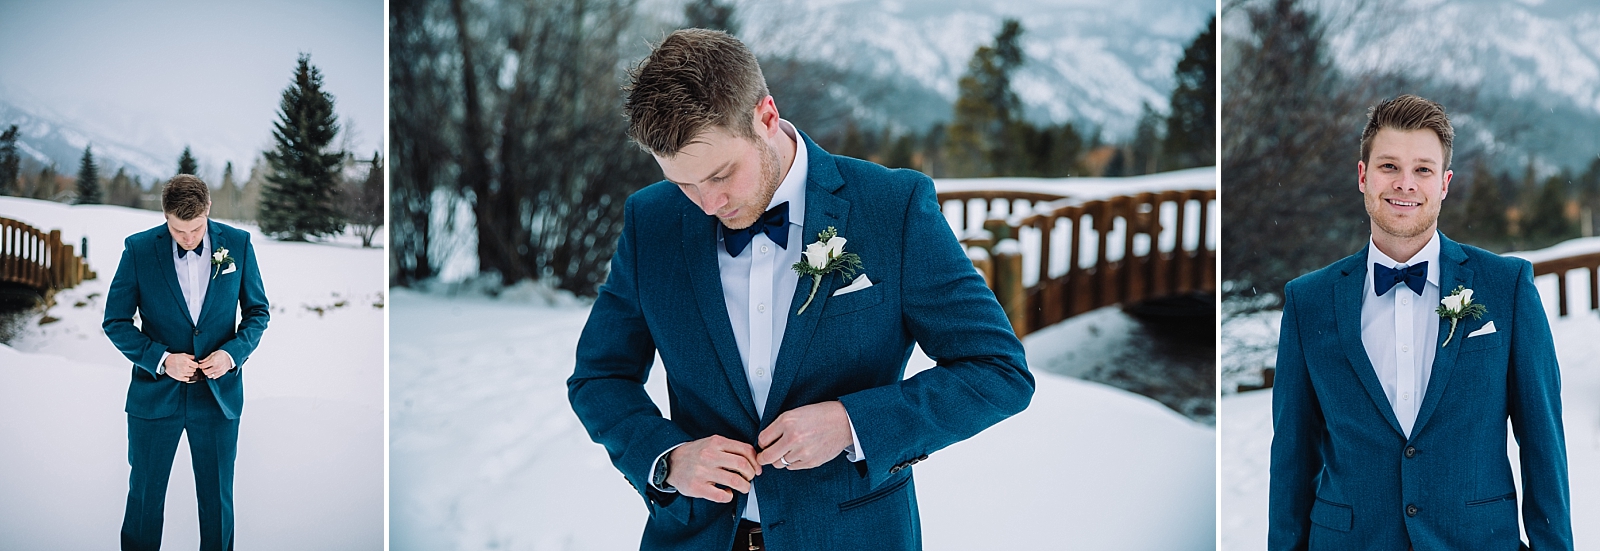 groom details winter wedding jackson hole